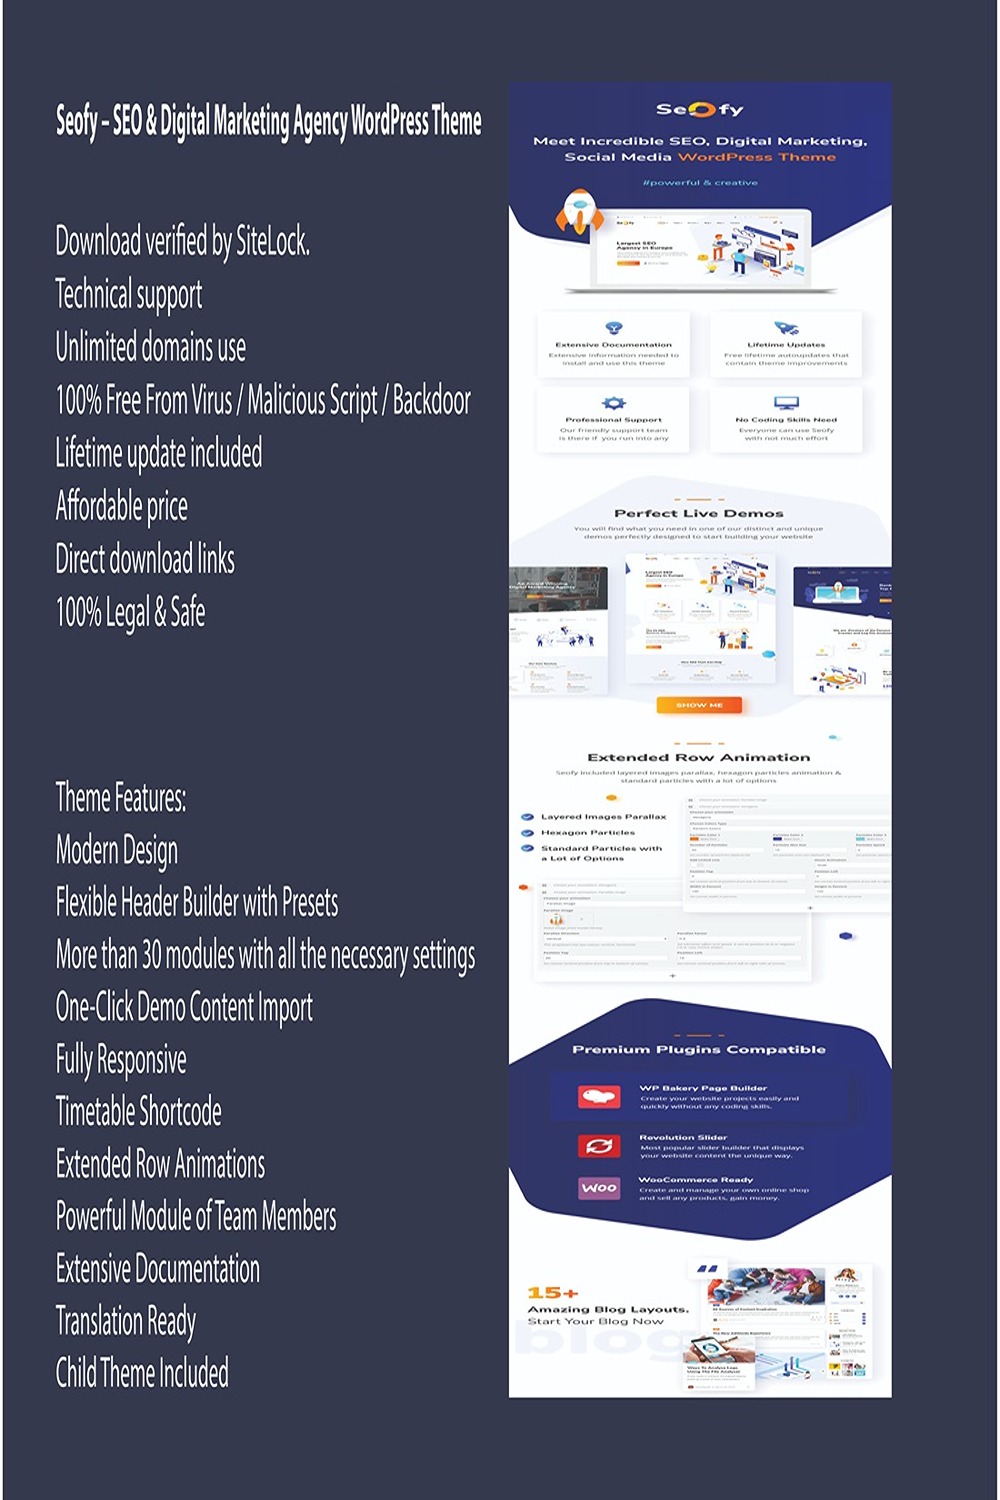 Seofy – SEO & Digital Marketing Agency WordPress Theme pinterest preview image.